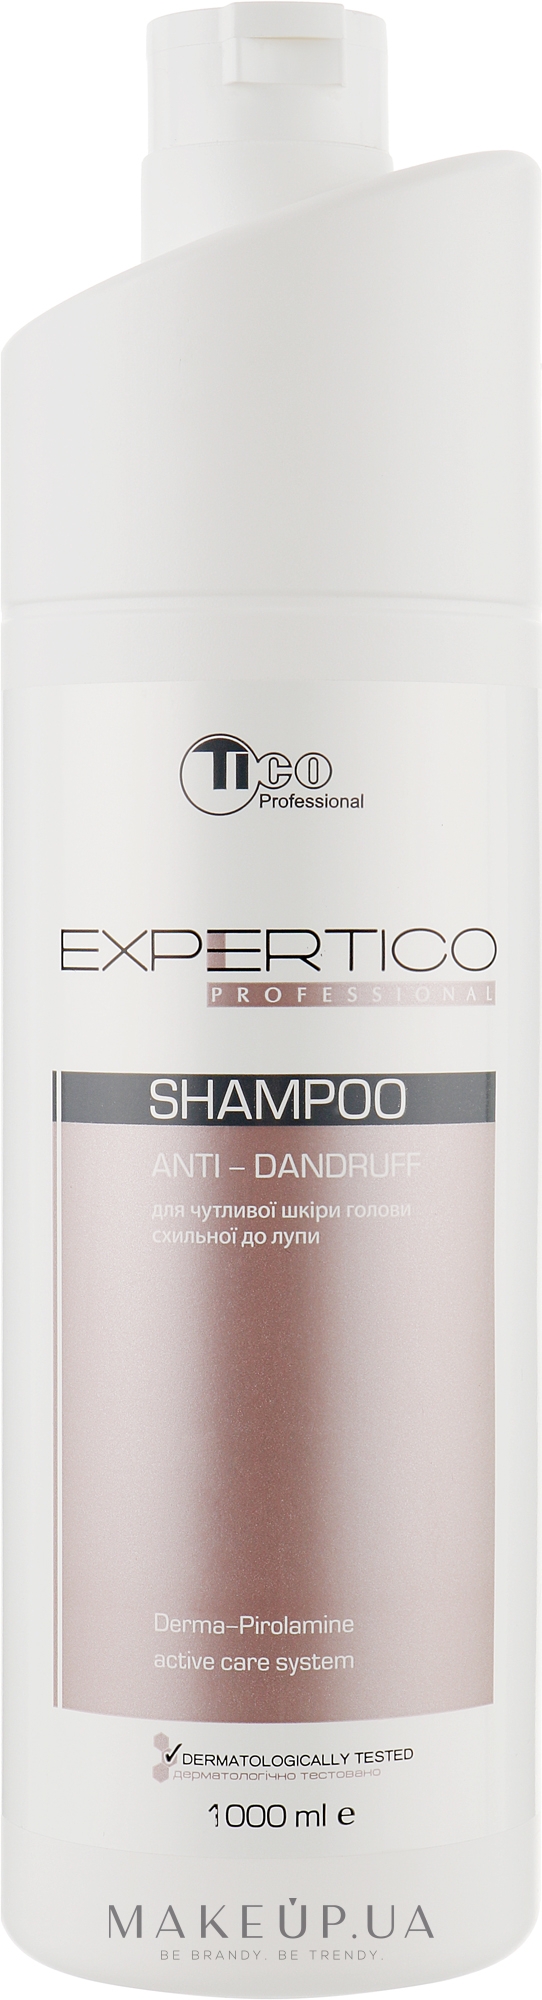 Шампунь для волос против перхоти - Tico Professional Expertico Anti-Dandruff Shampoo — фото 1000ml